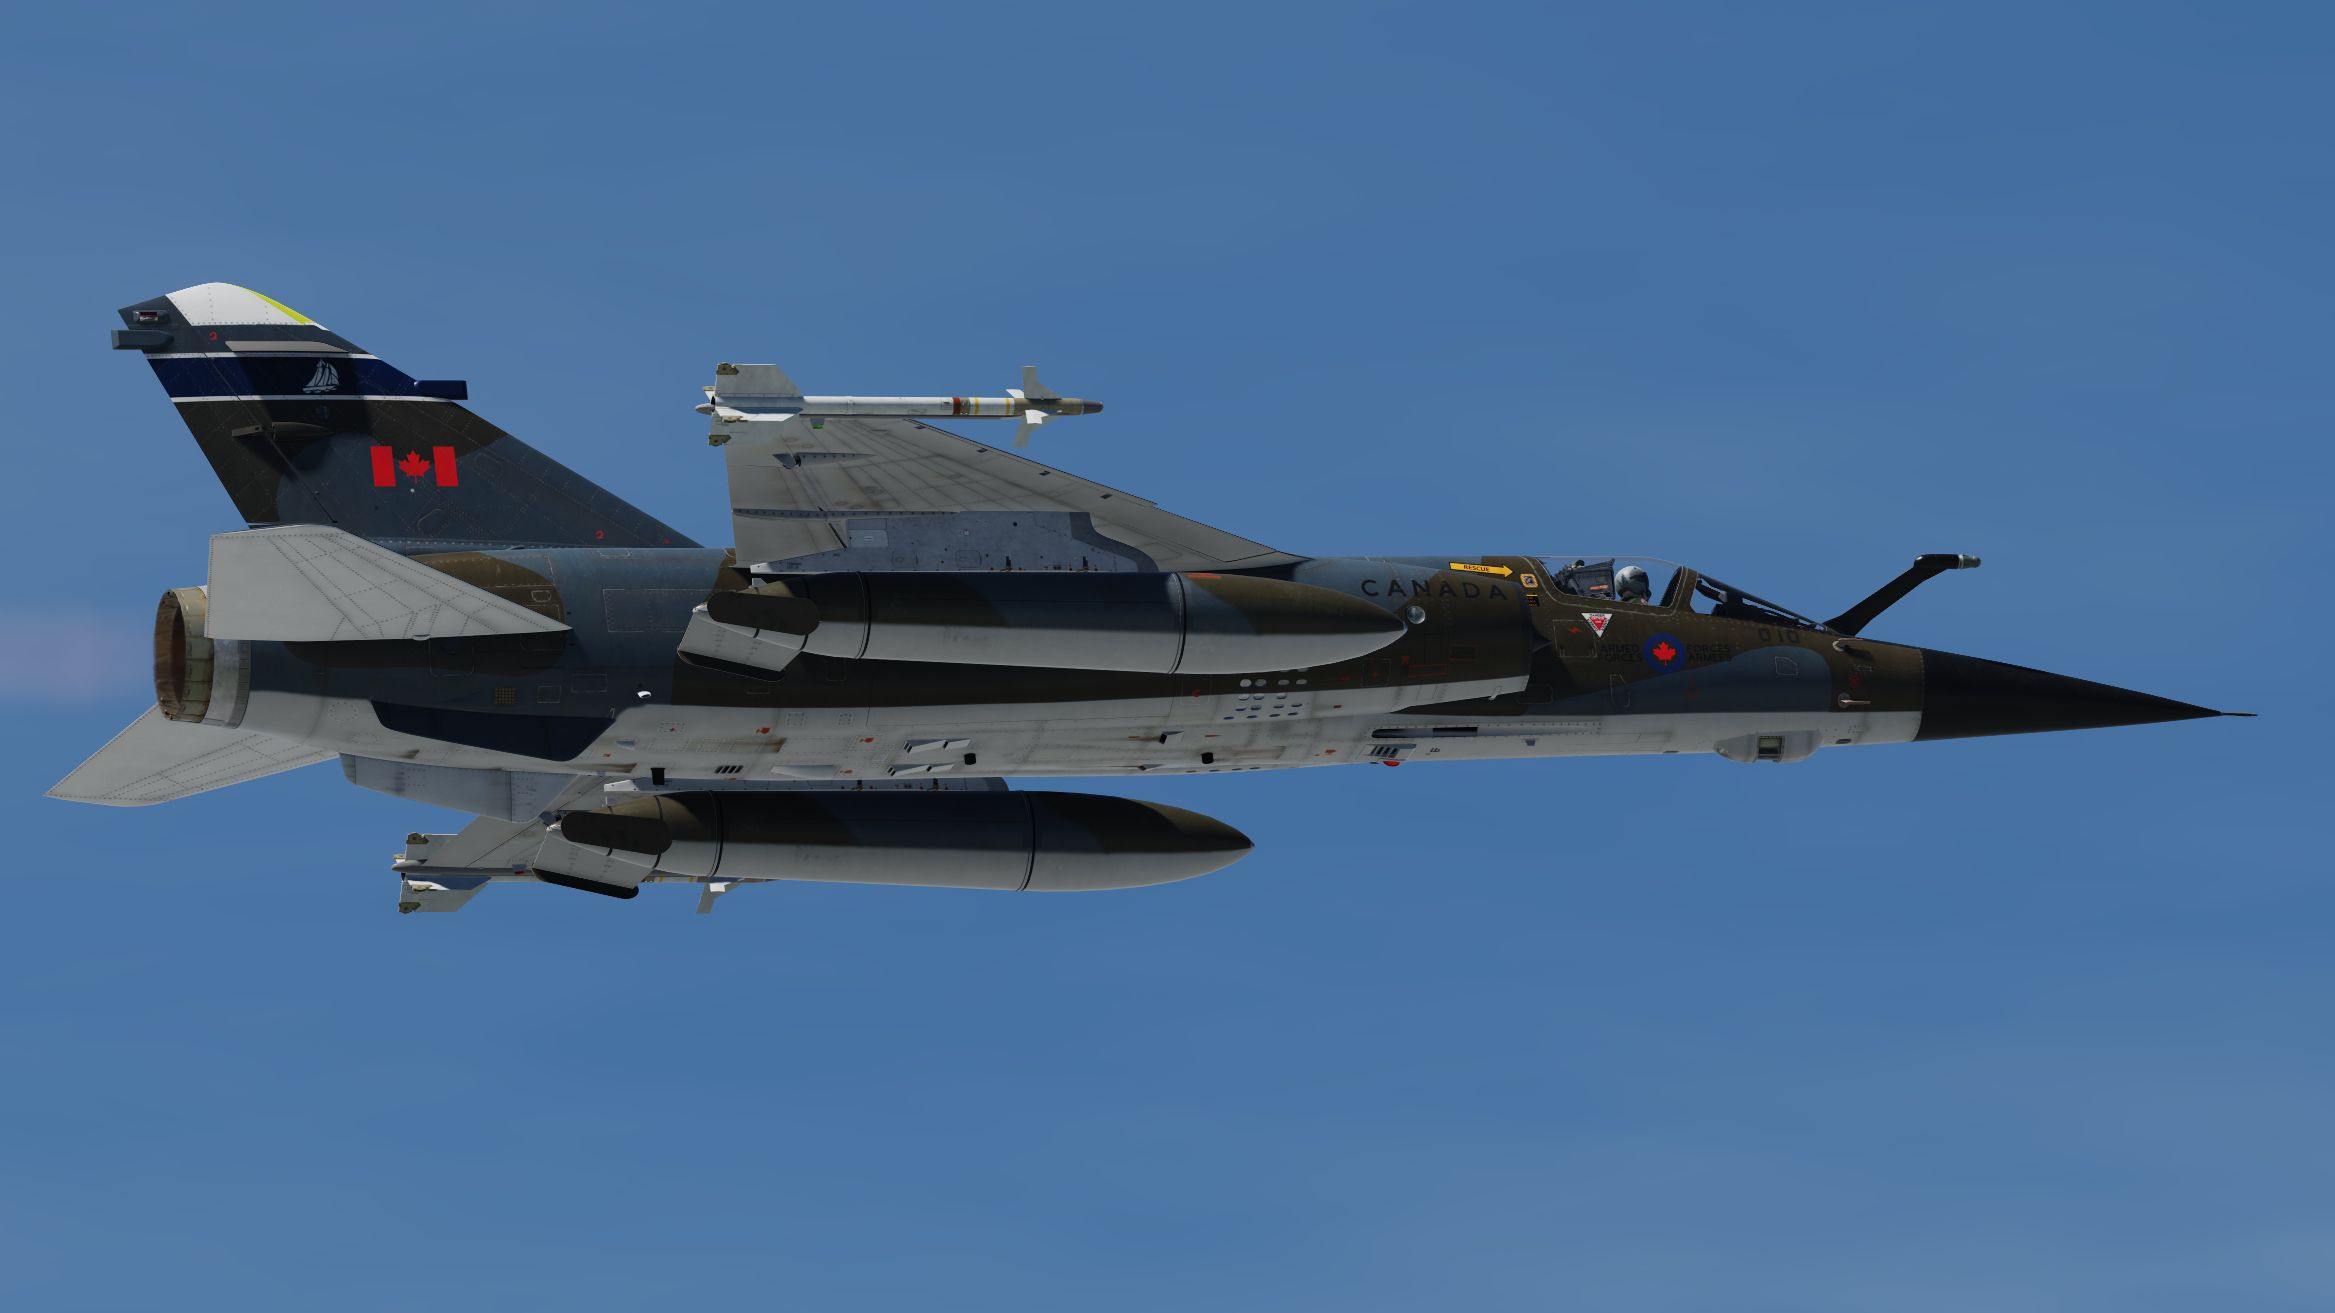 RCAF 434 Squadron Mirage F1